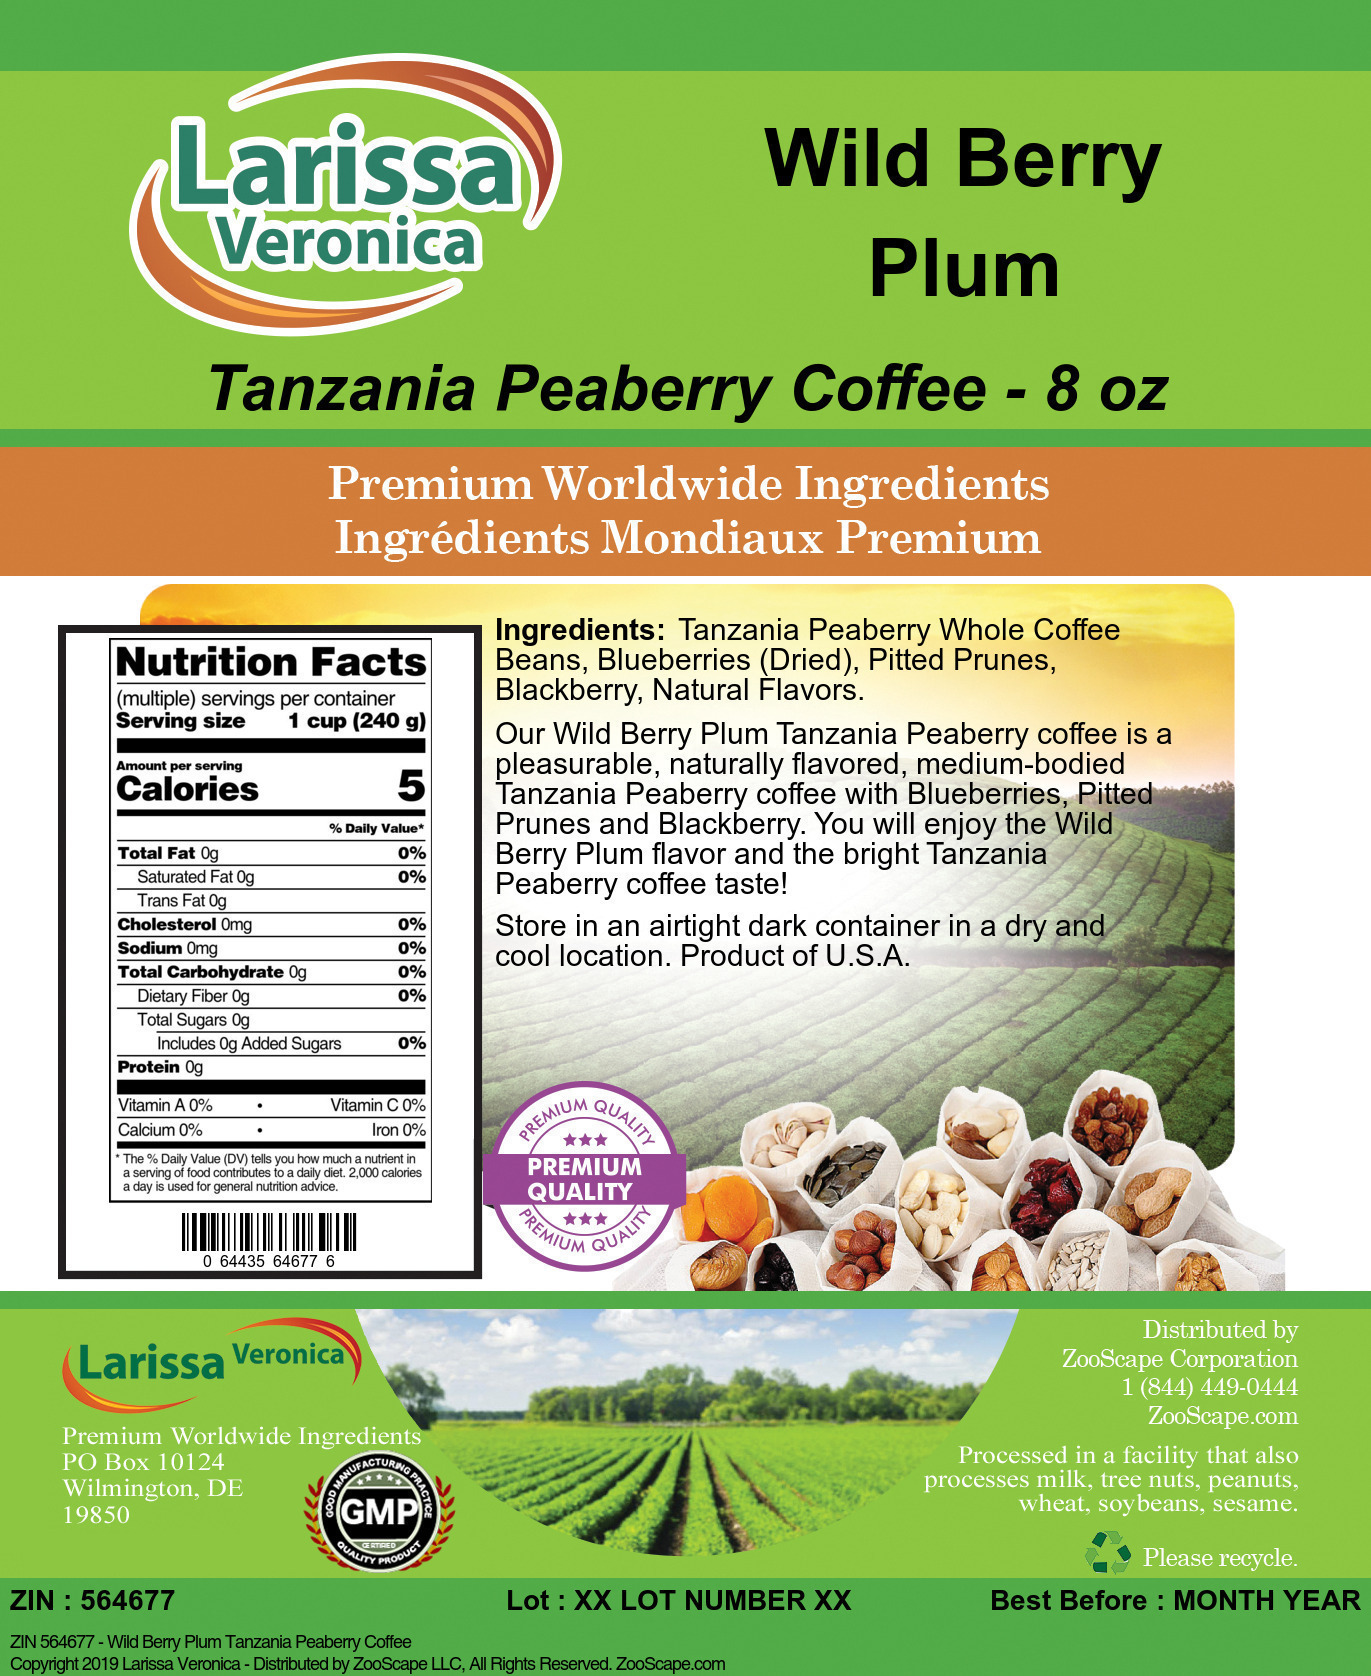 Wild Berry Plum Tanzania Peaberry Coffee - Label